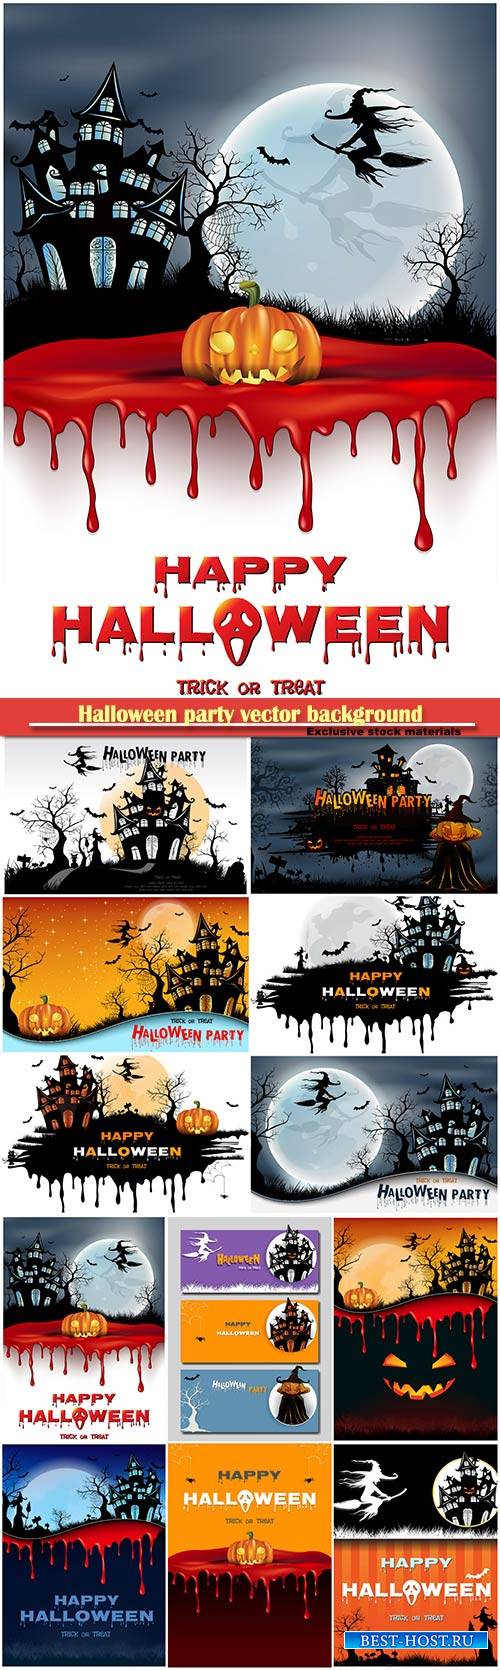 Halloween party vector background